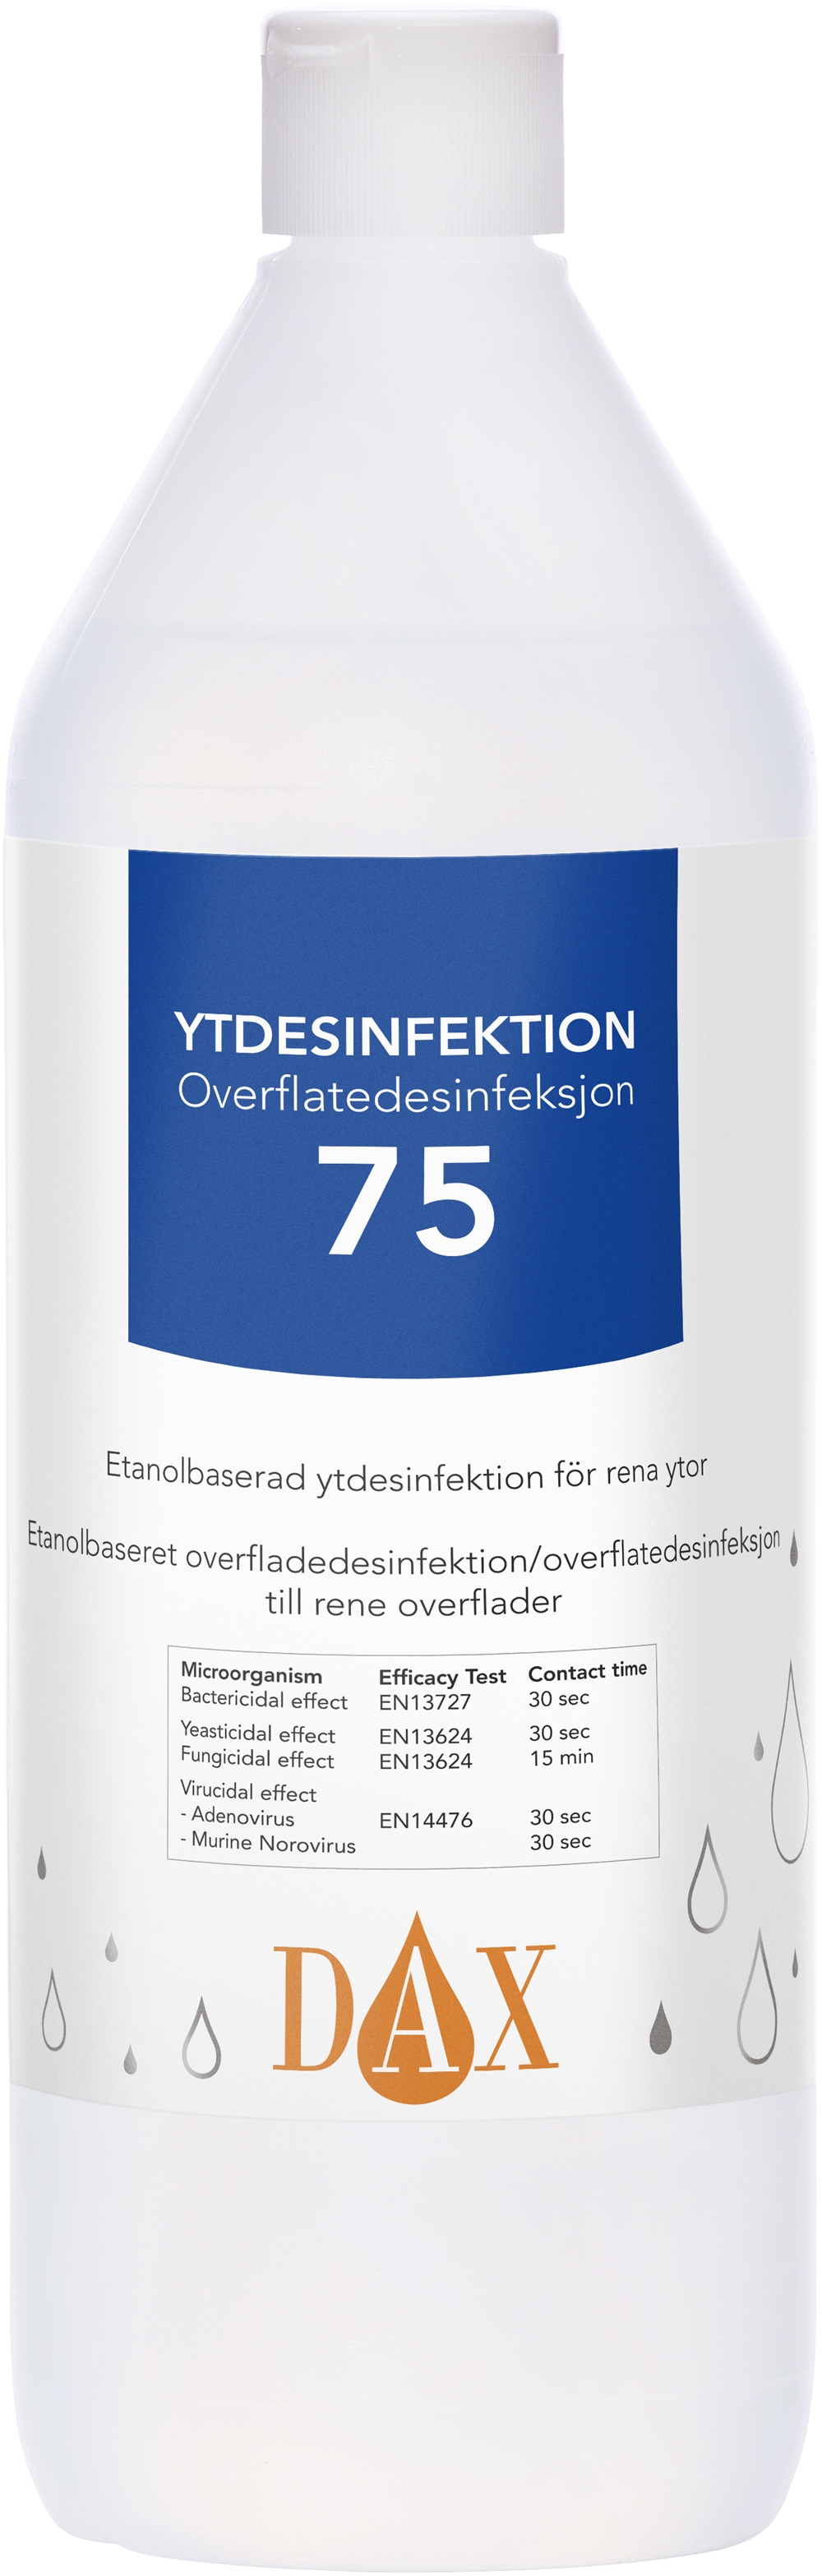 Ytdesinfektion DAX 75 etanol - 1000ml för rena ytor